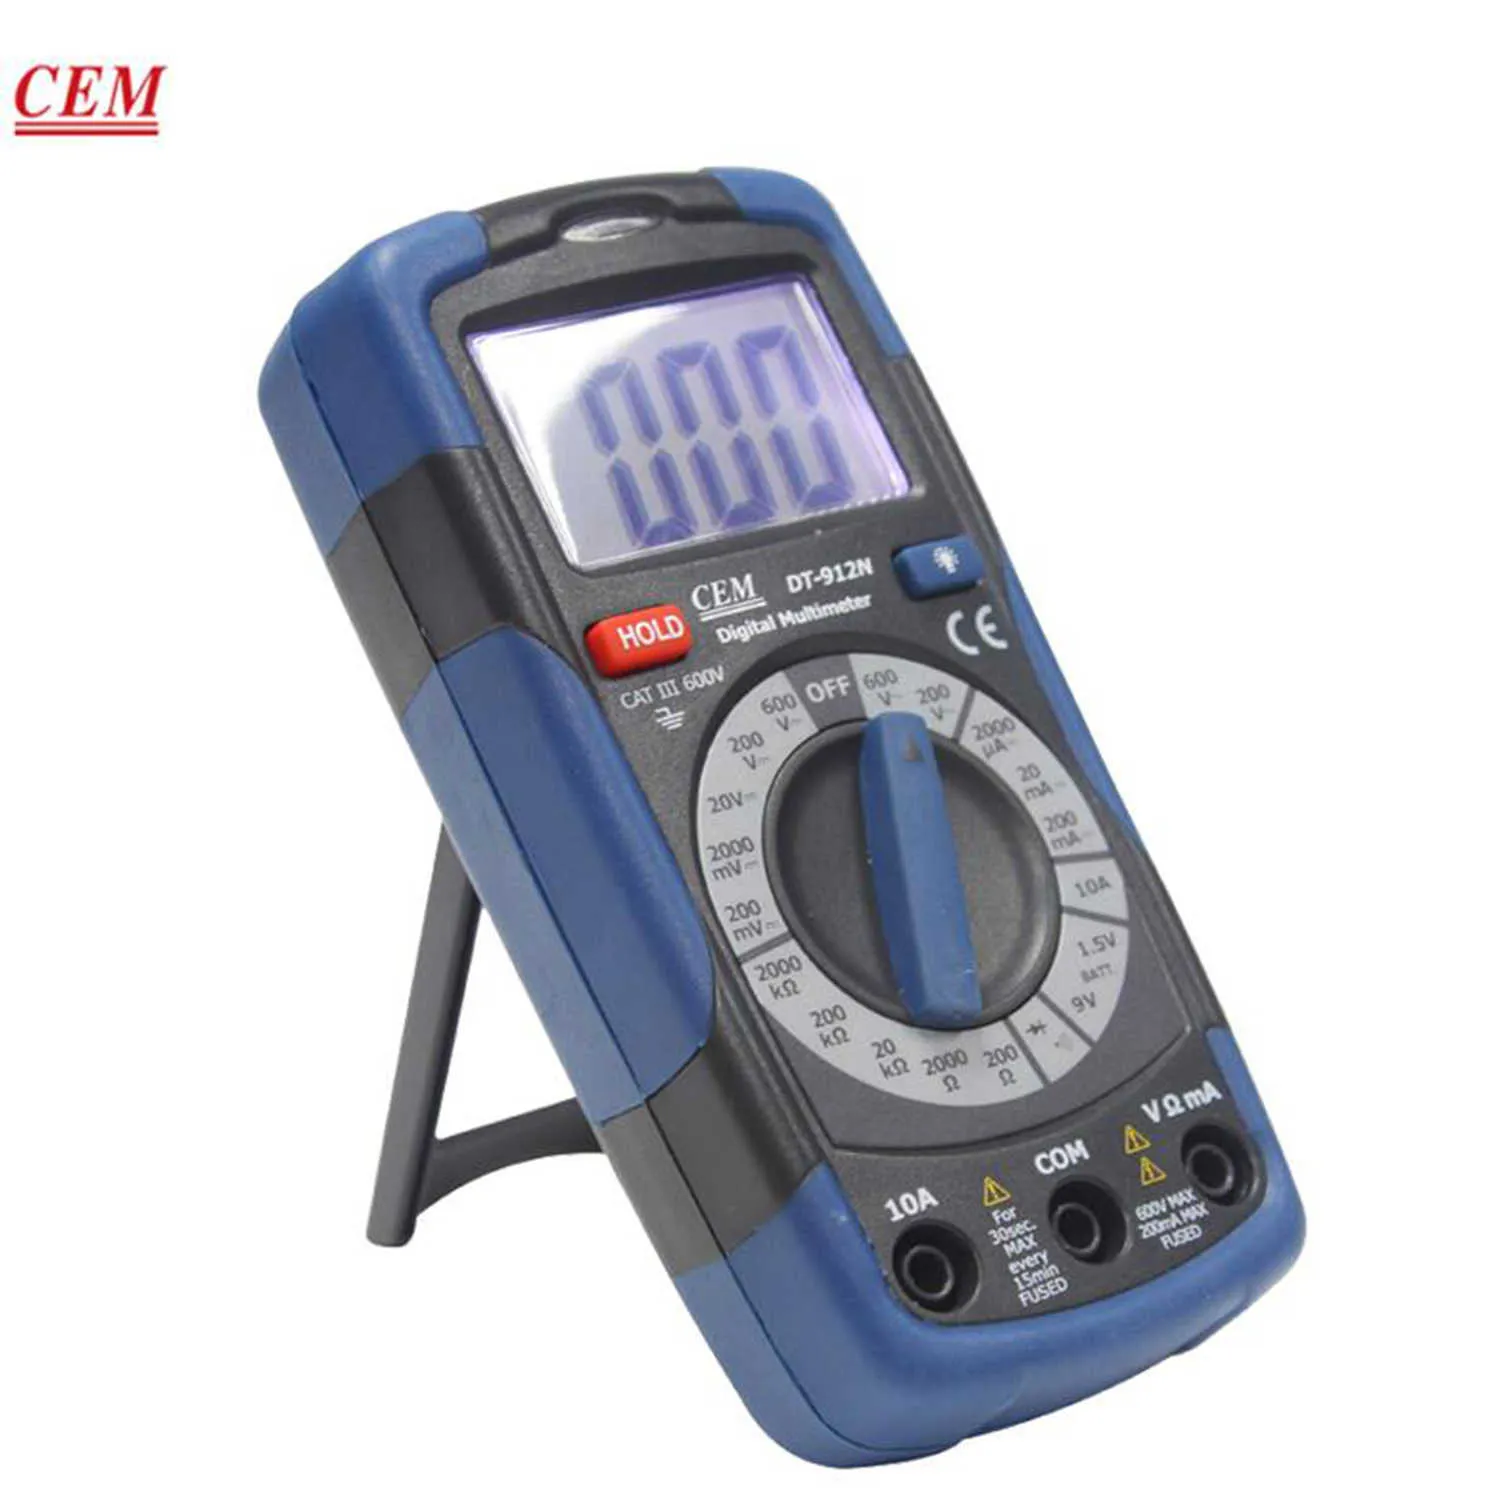 CEM DT-912N مضغوط متعدد المقاييس Digital Multimeters Digital التيار الكهربائي اختبار الجهد الجهد اختبار السلامة توافق جديد.